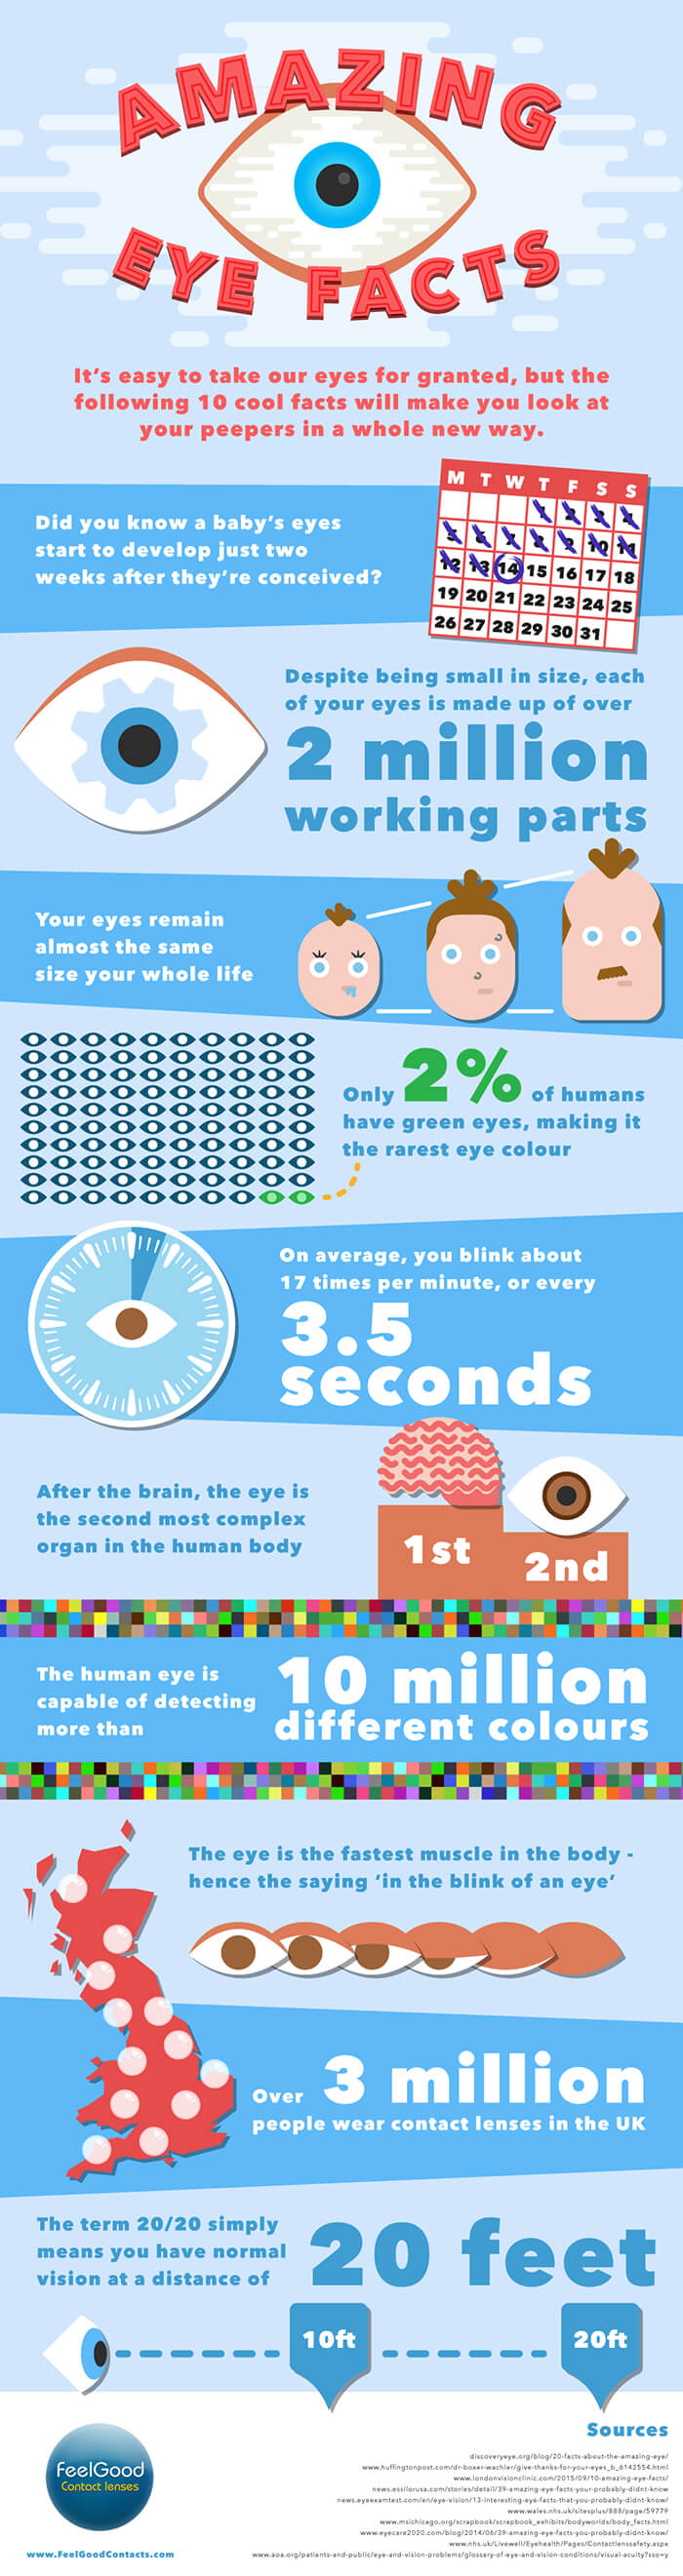 10 amazing eye facts infographic
